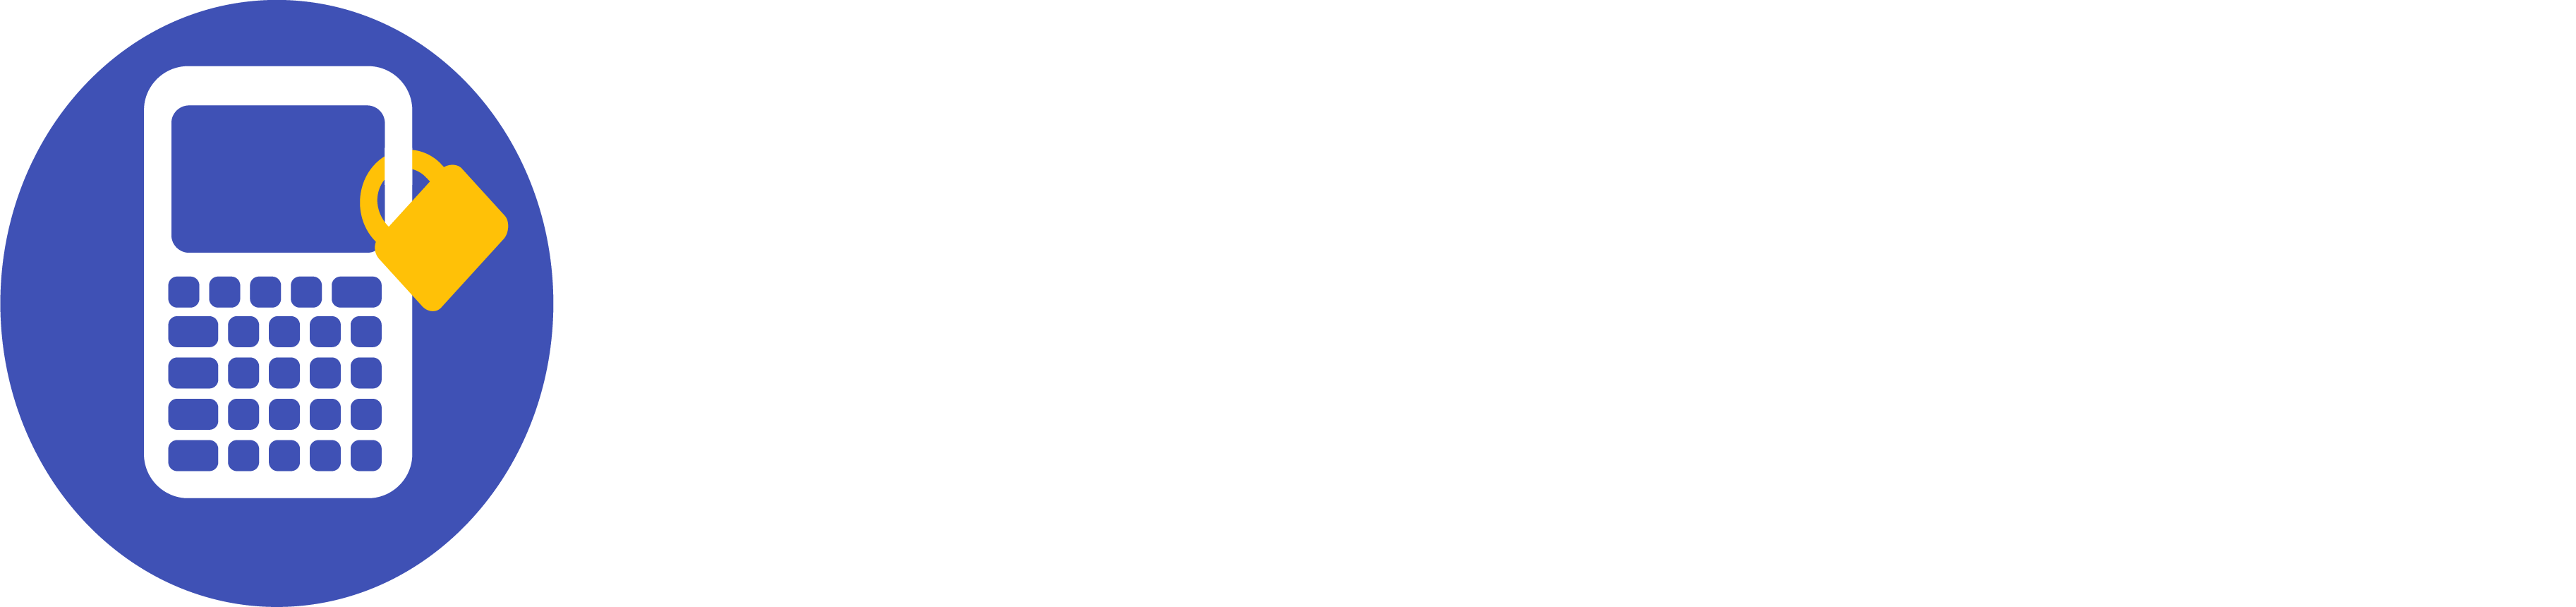 GraphLock Logo